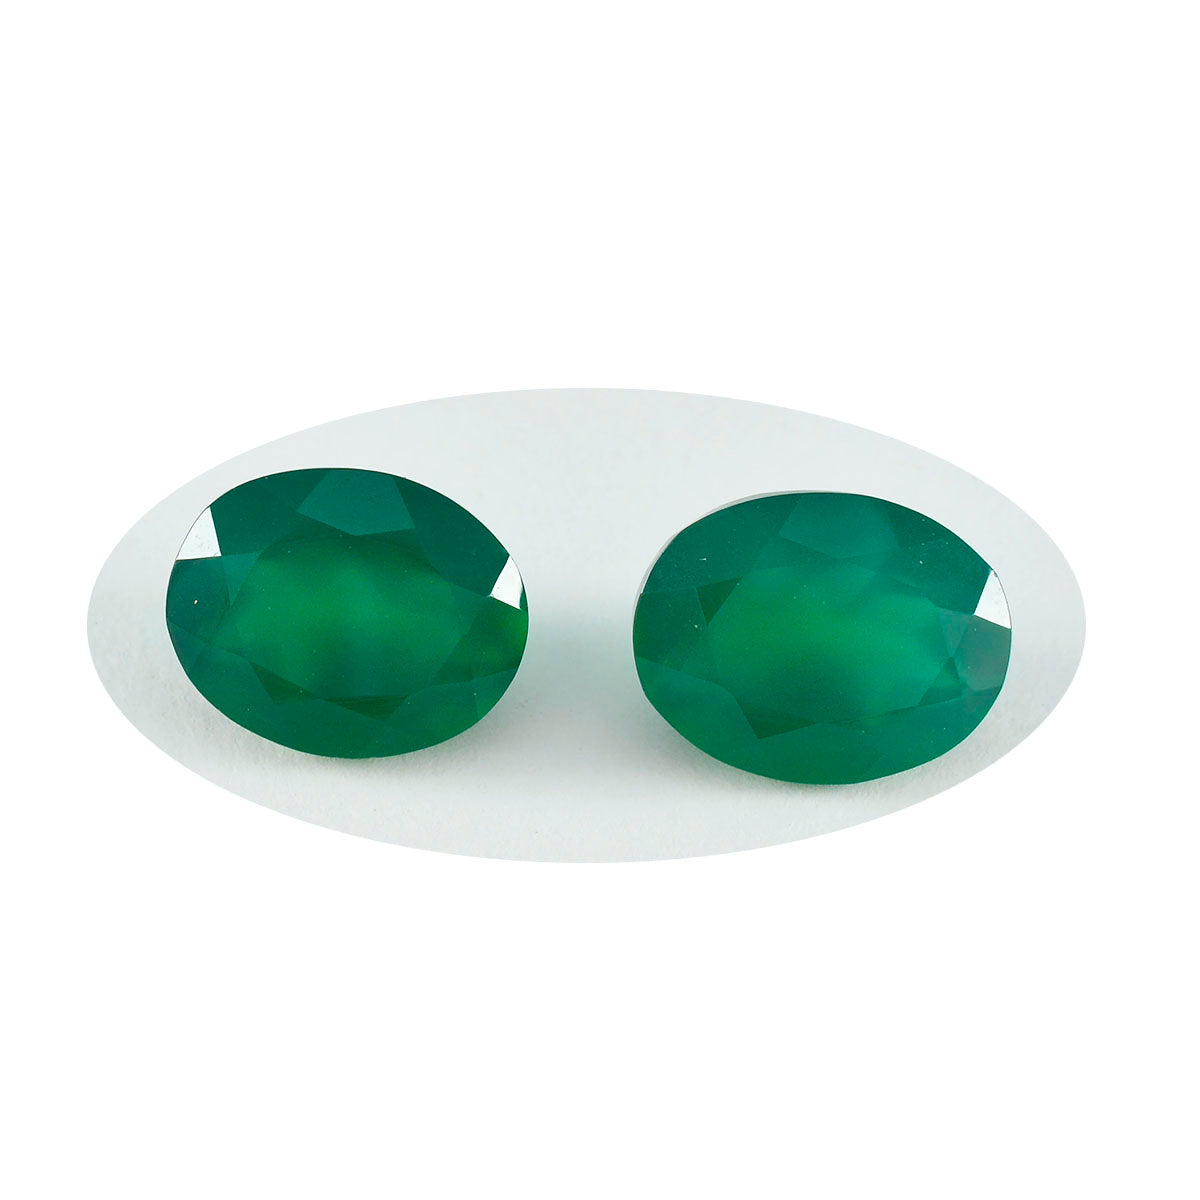 Riyogems 1PC Genuine Green Onyx Faceted 7x9 mm Oval Shape handsome Quality Gem